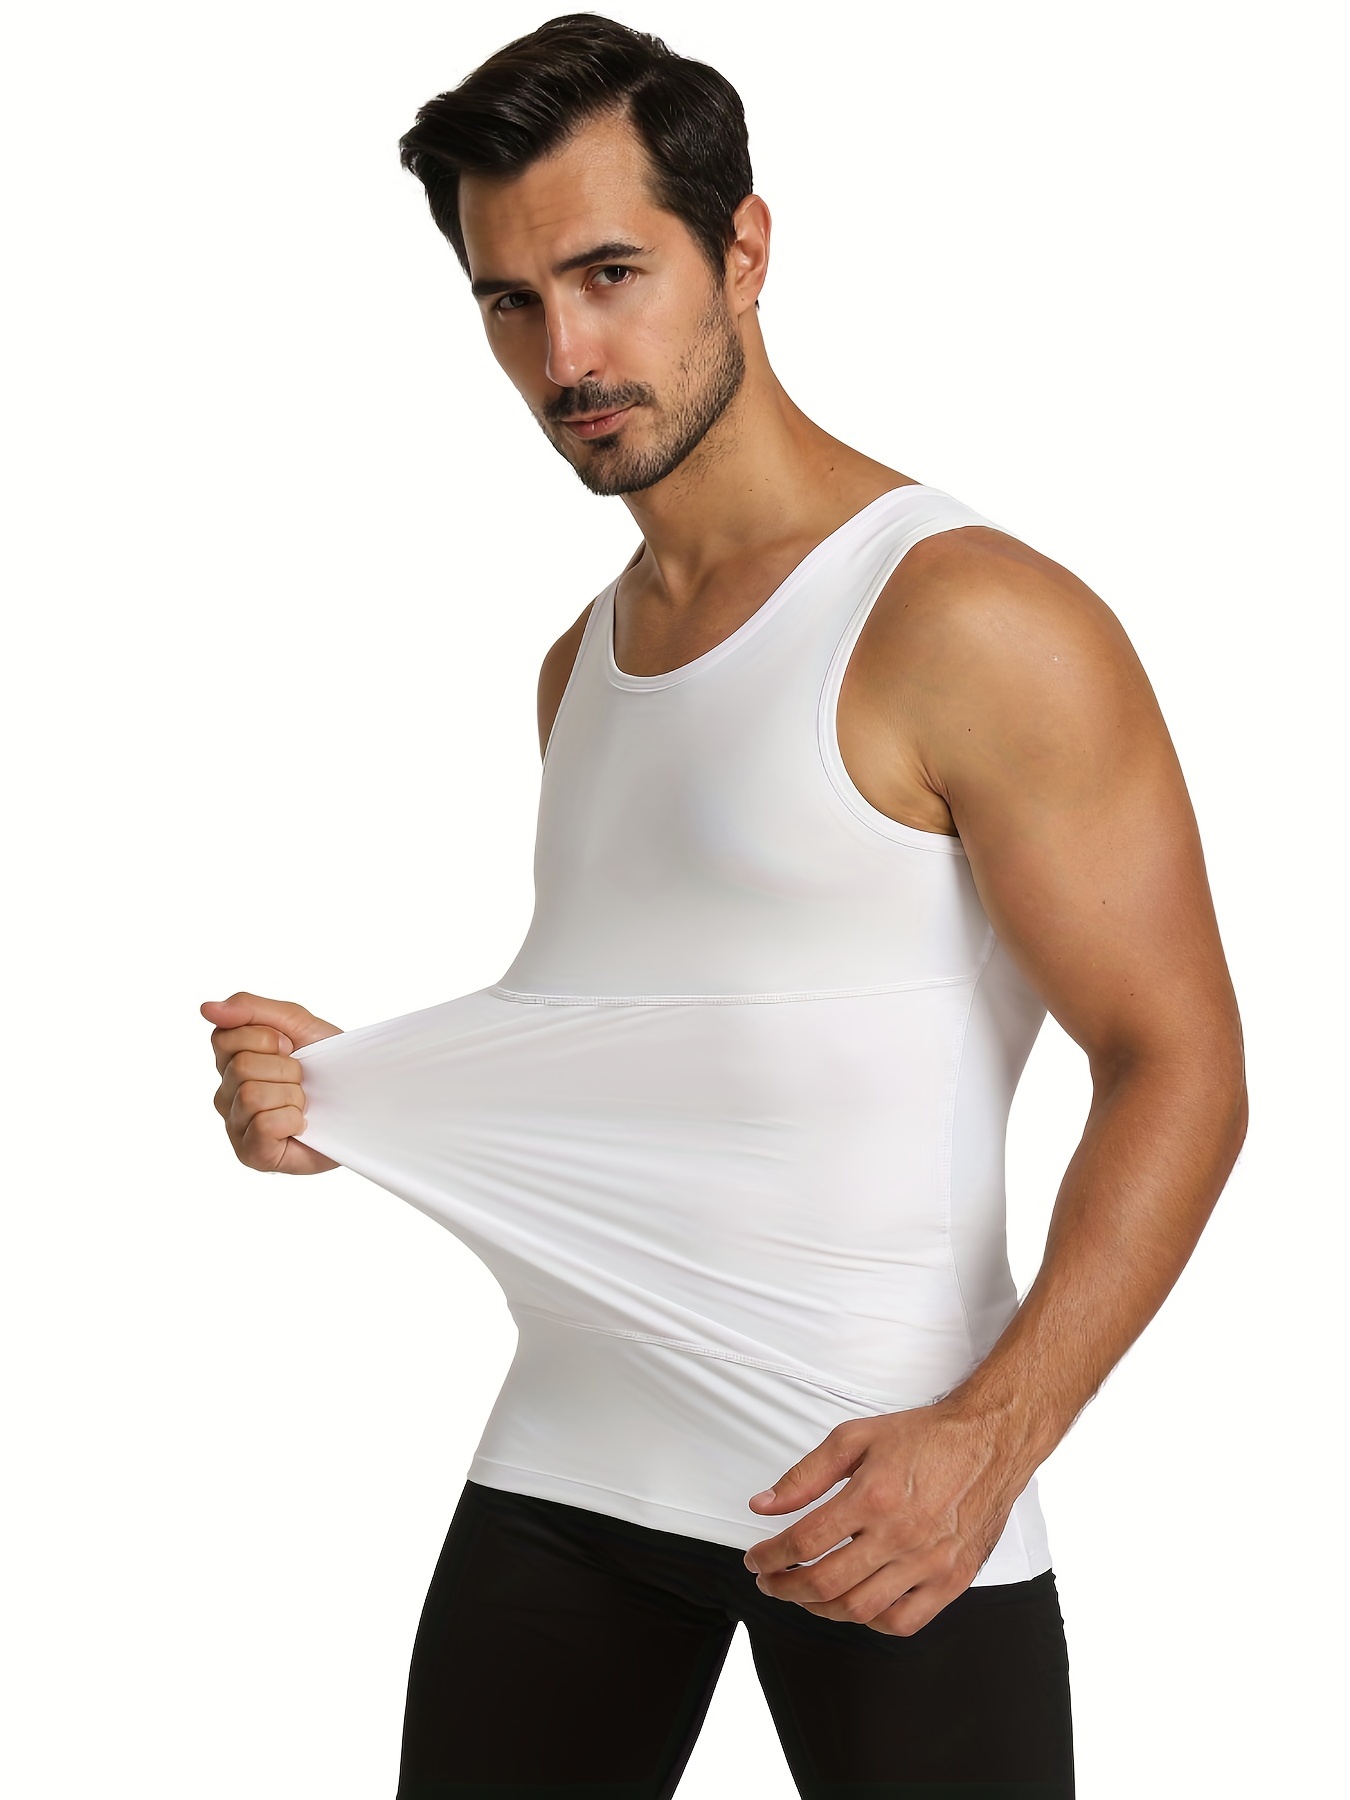 Men's Tummy Control Body Shaper Tops Hide Gynecomastia Chest Fat Shirt  Shapewear 